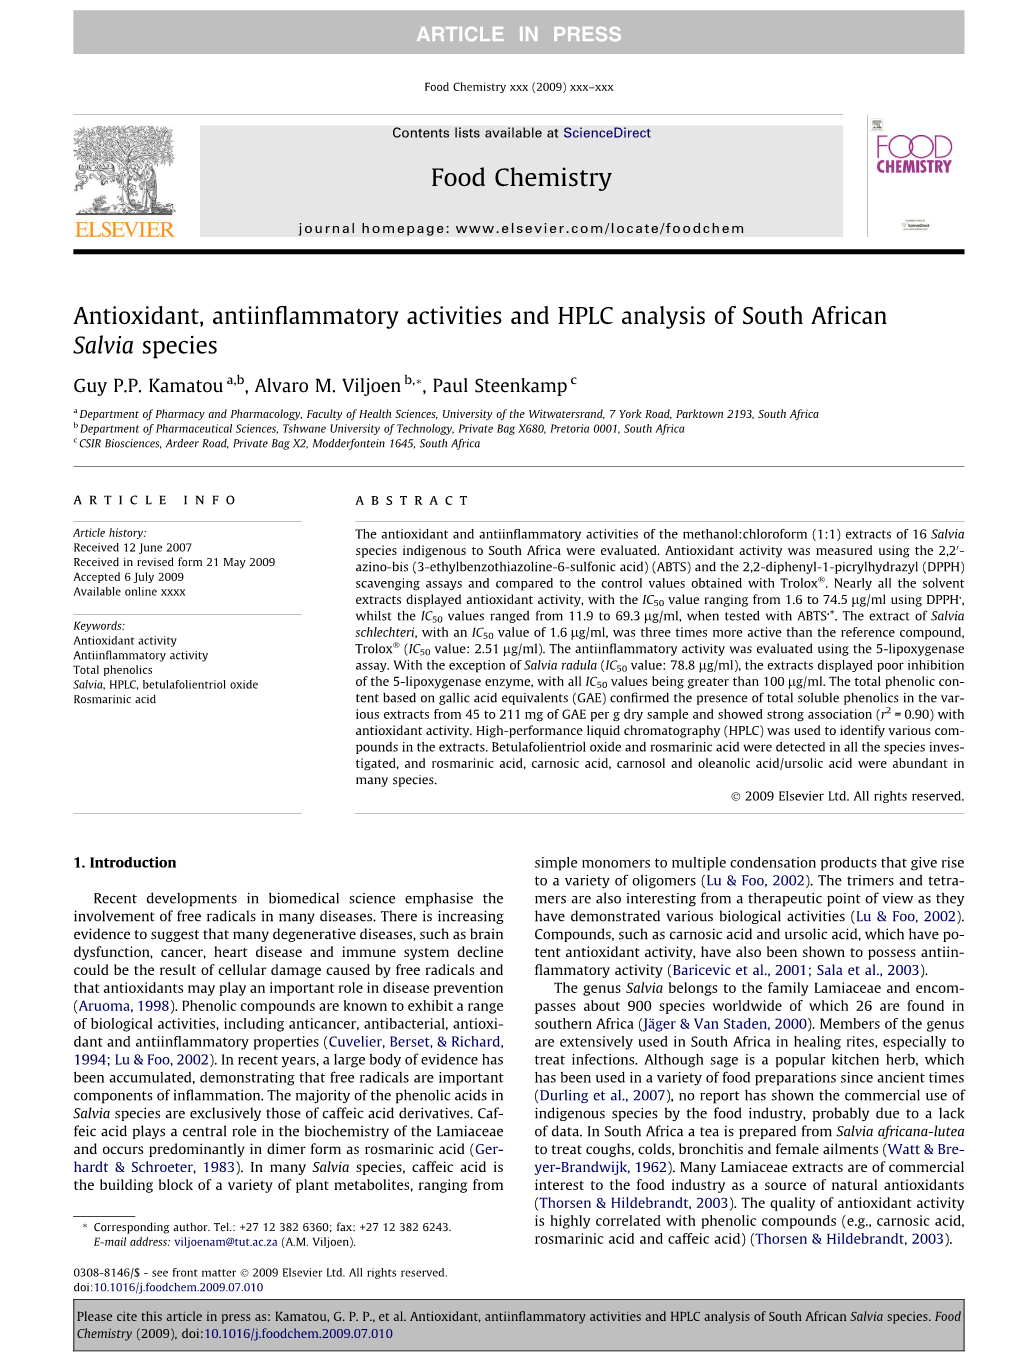 Antioxidant, Antiinflammatory Activities and HPLC Analysis of South